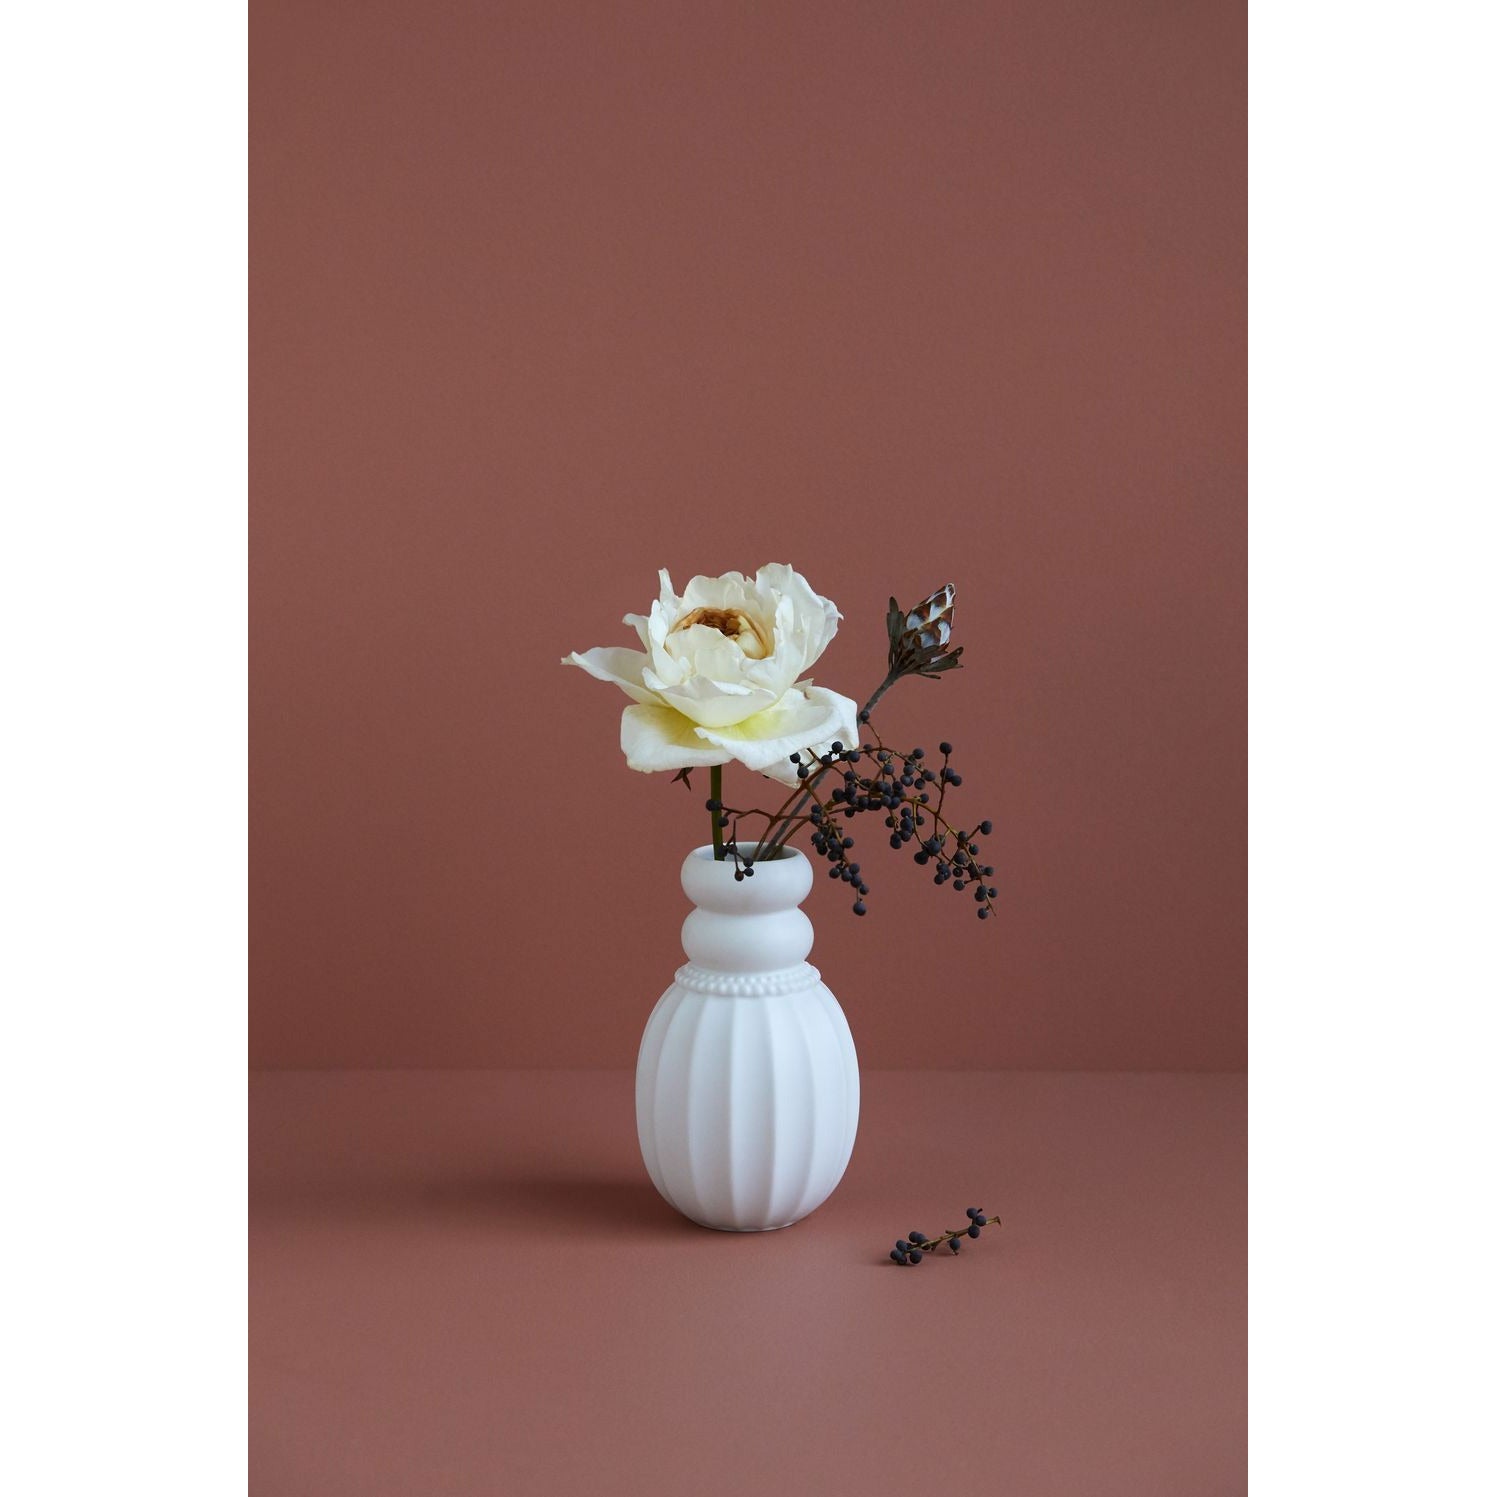 Dottir Pearlpuff -vase, hvid